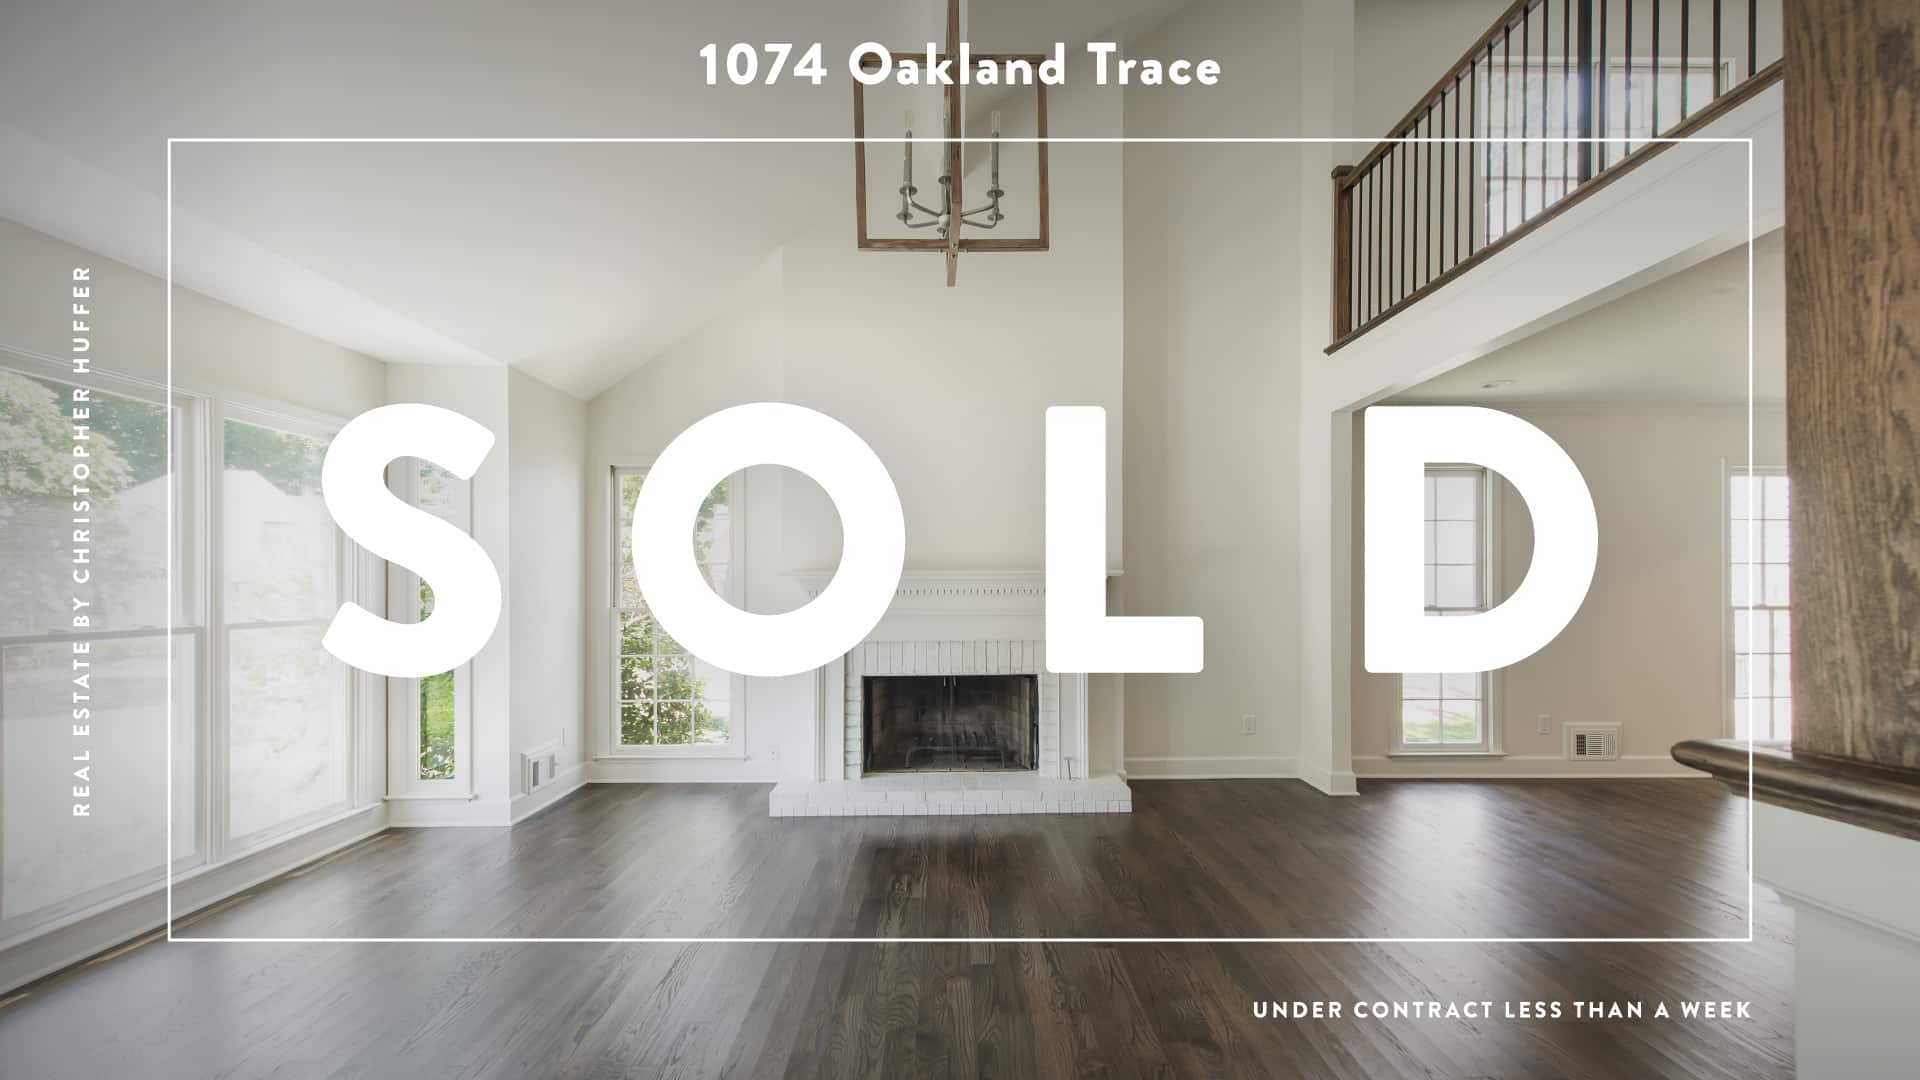 Sold: 1074 Oakland Trace by Christopher Huffer, Atlanta Realtor